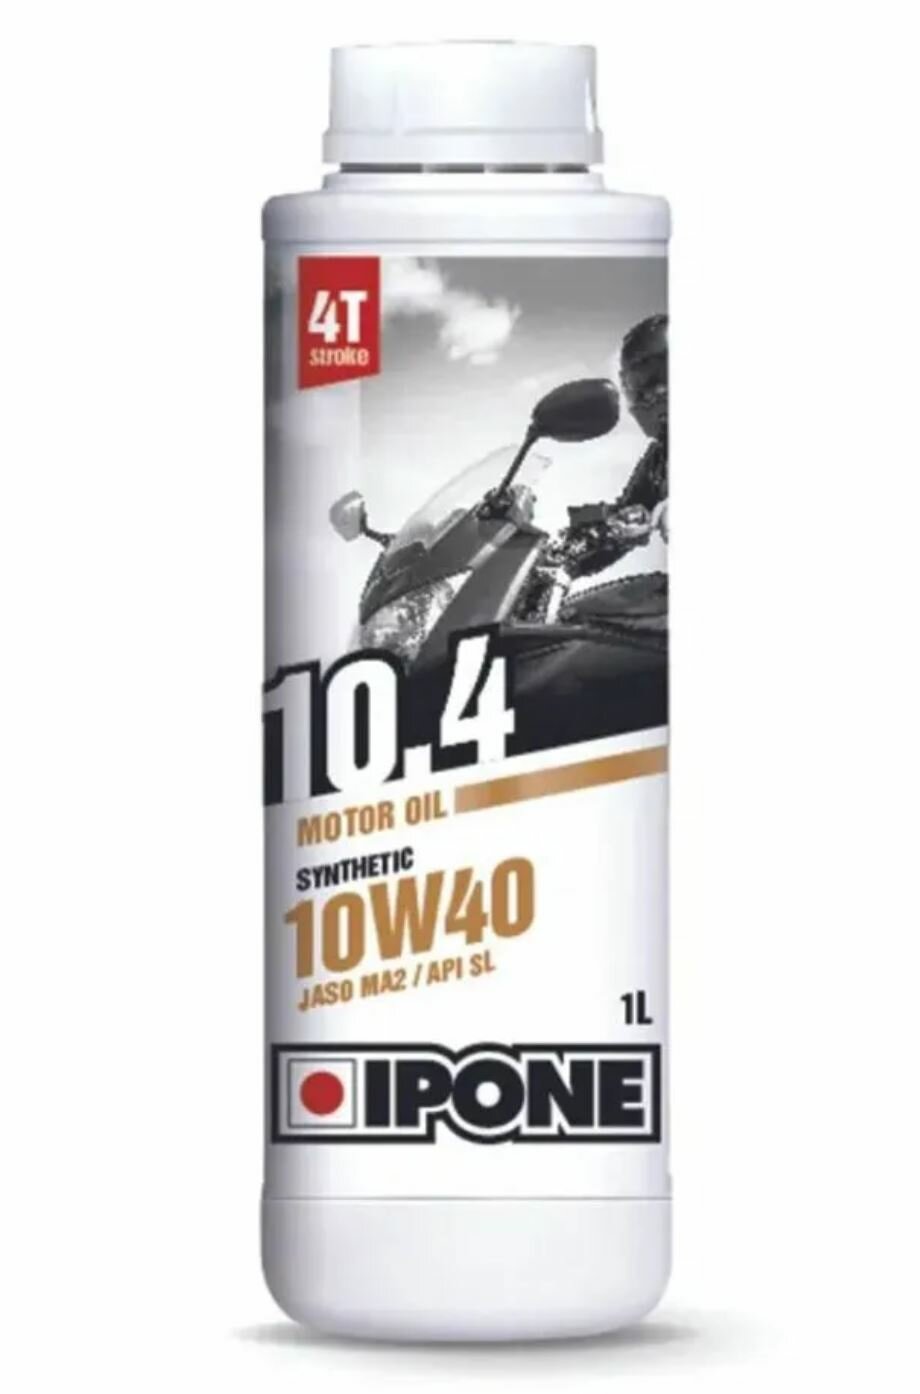 Синтетическое моторное масло IPONE 10.4 10W40, 1 л, 1 шт.